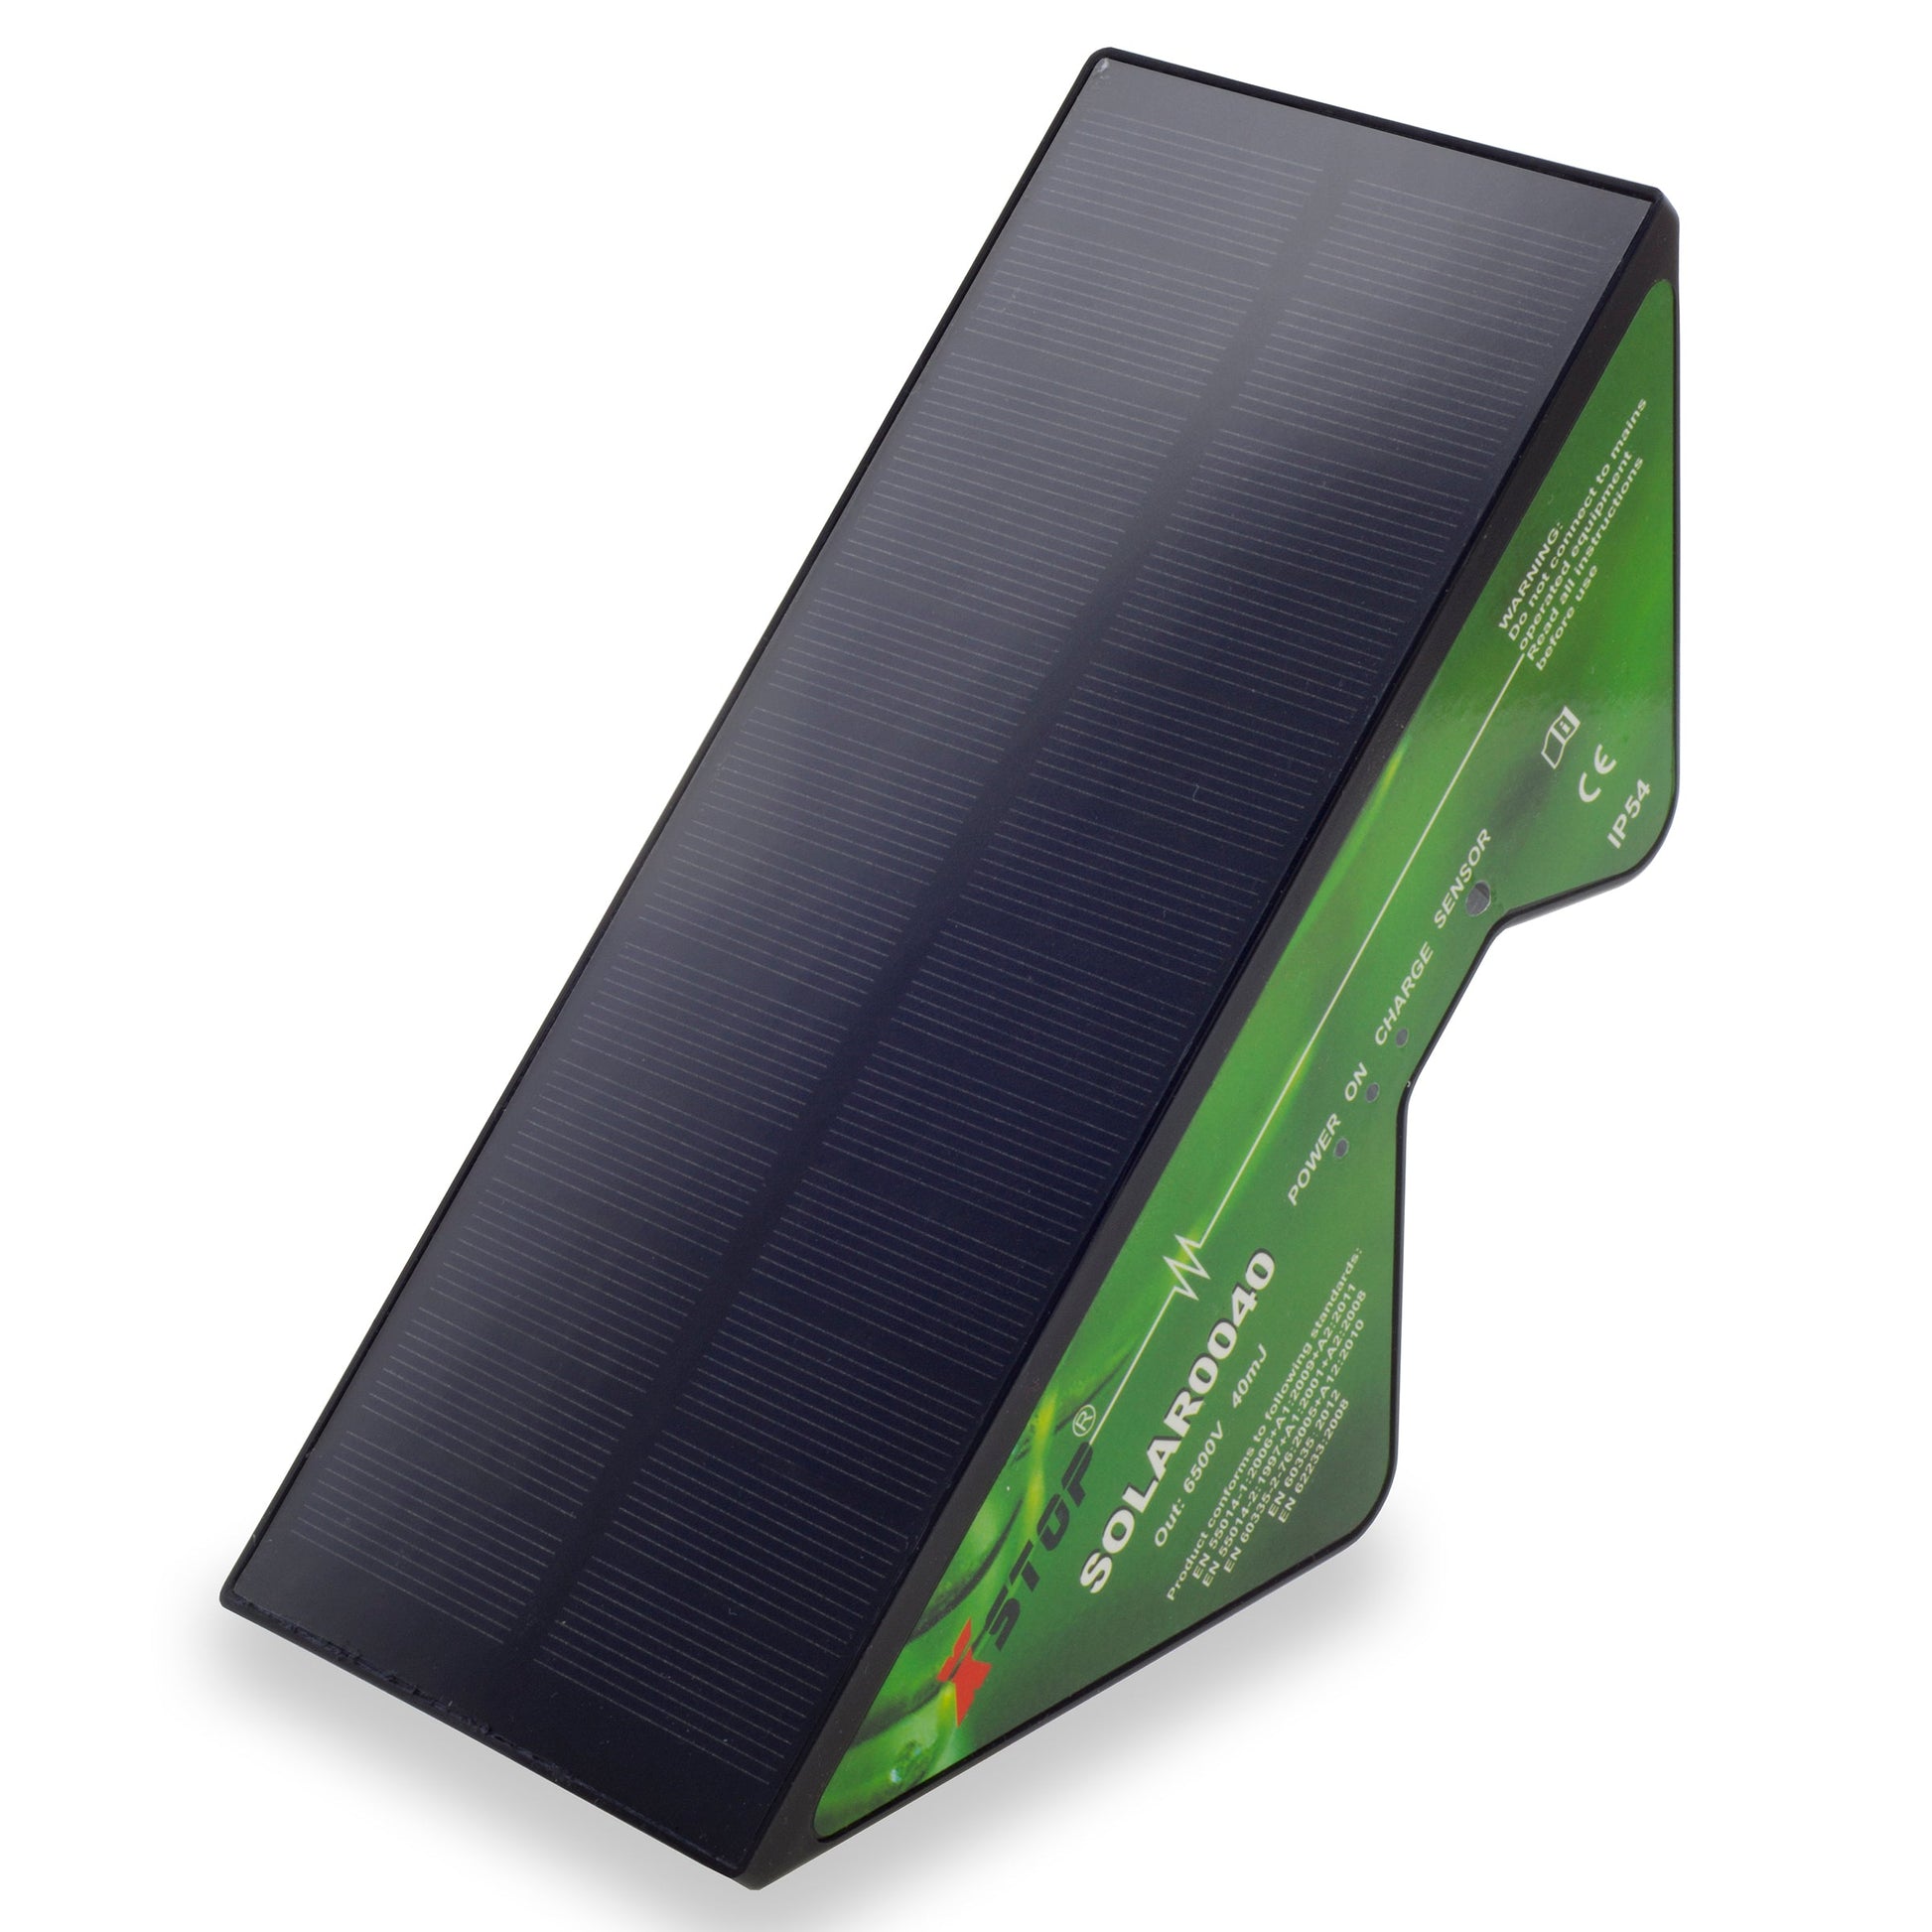 Solar 0040 Solar & Battery Powered Electric Fence Energiser .04J - 2Km | X-Stop